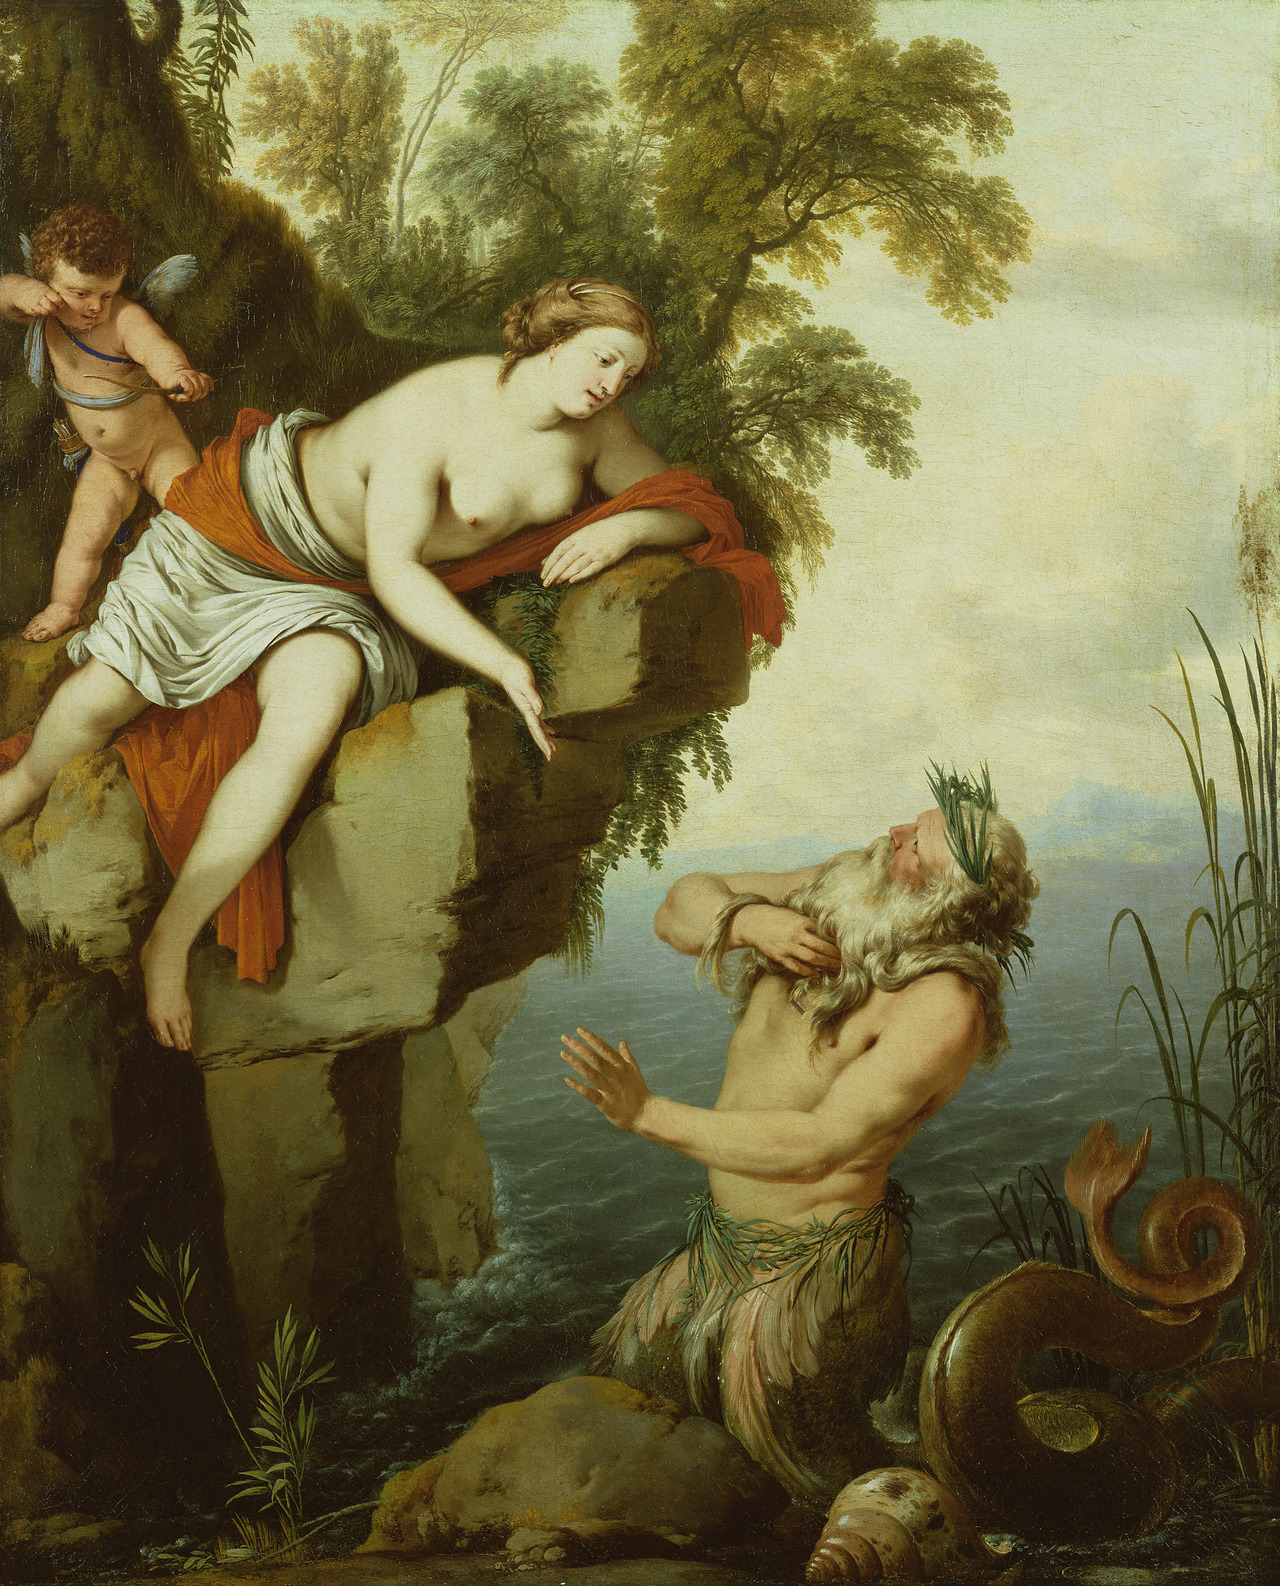 How to Beat the Heat: Seduce a sea god
Glaucus and Scylla, about 1640-1644, Laurent de La Hyre